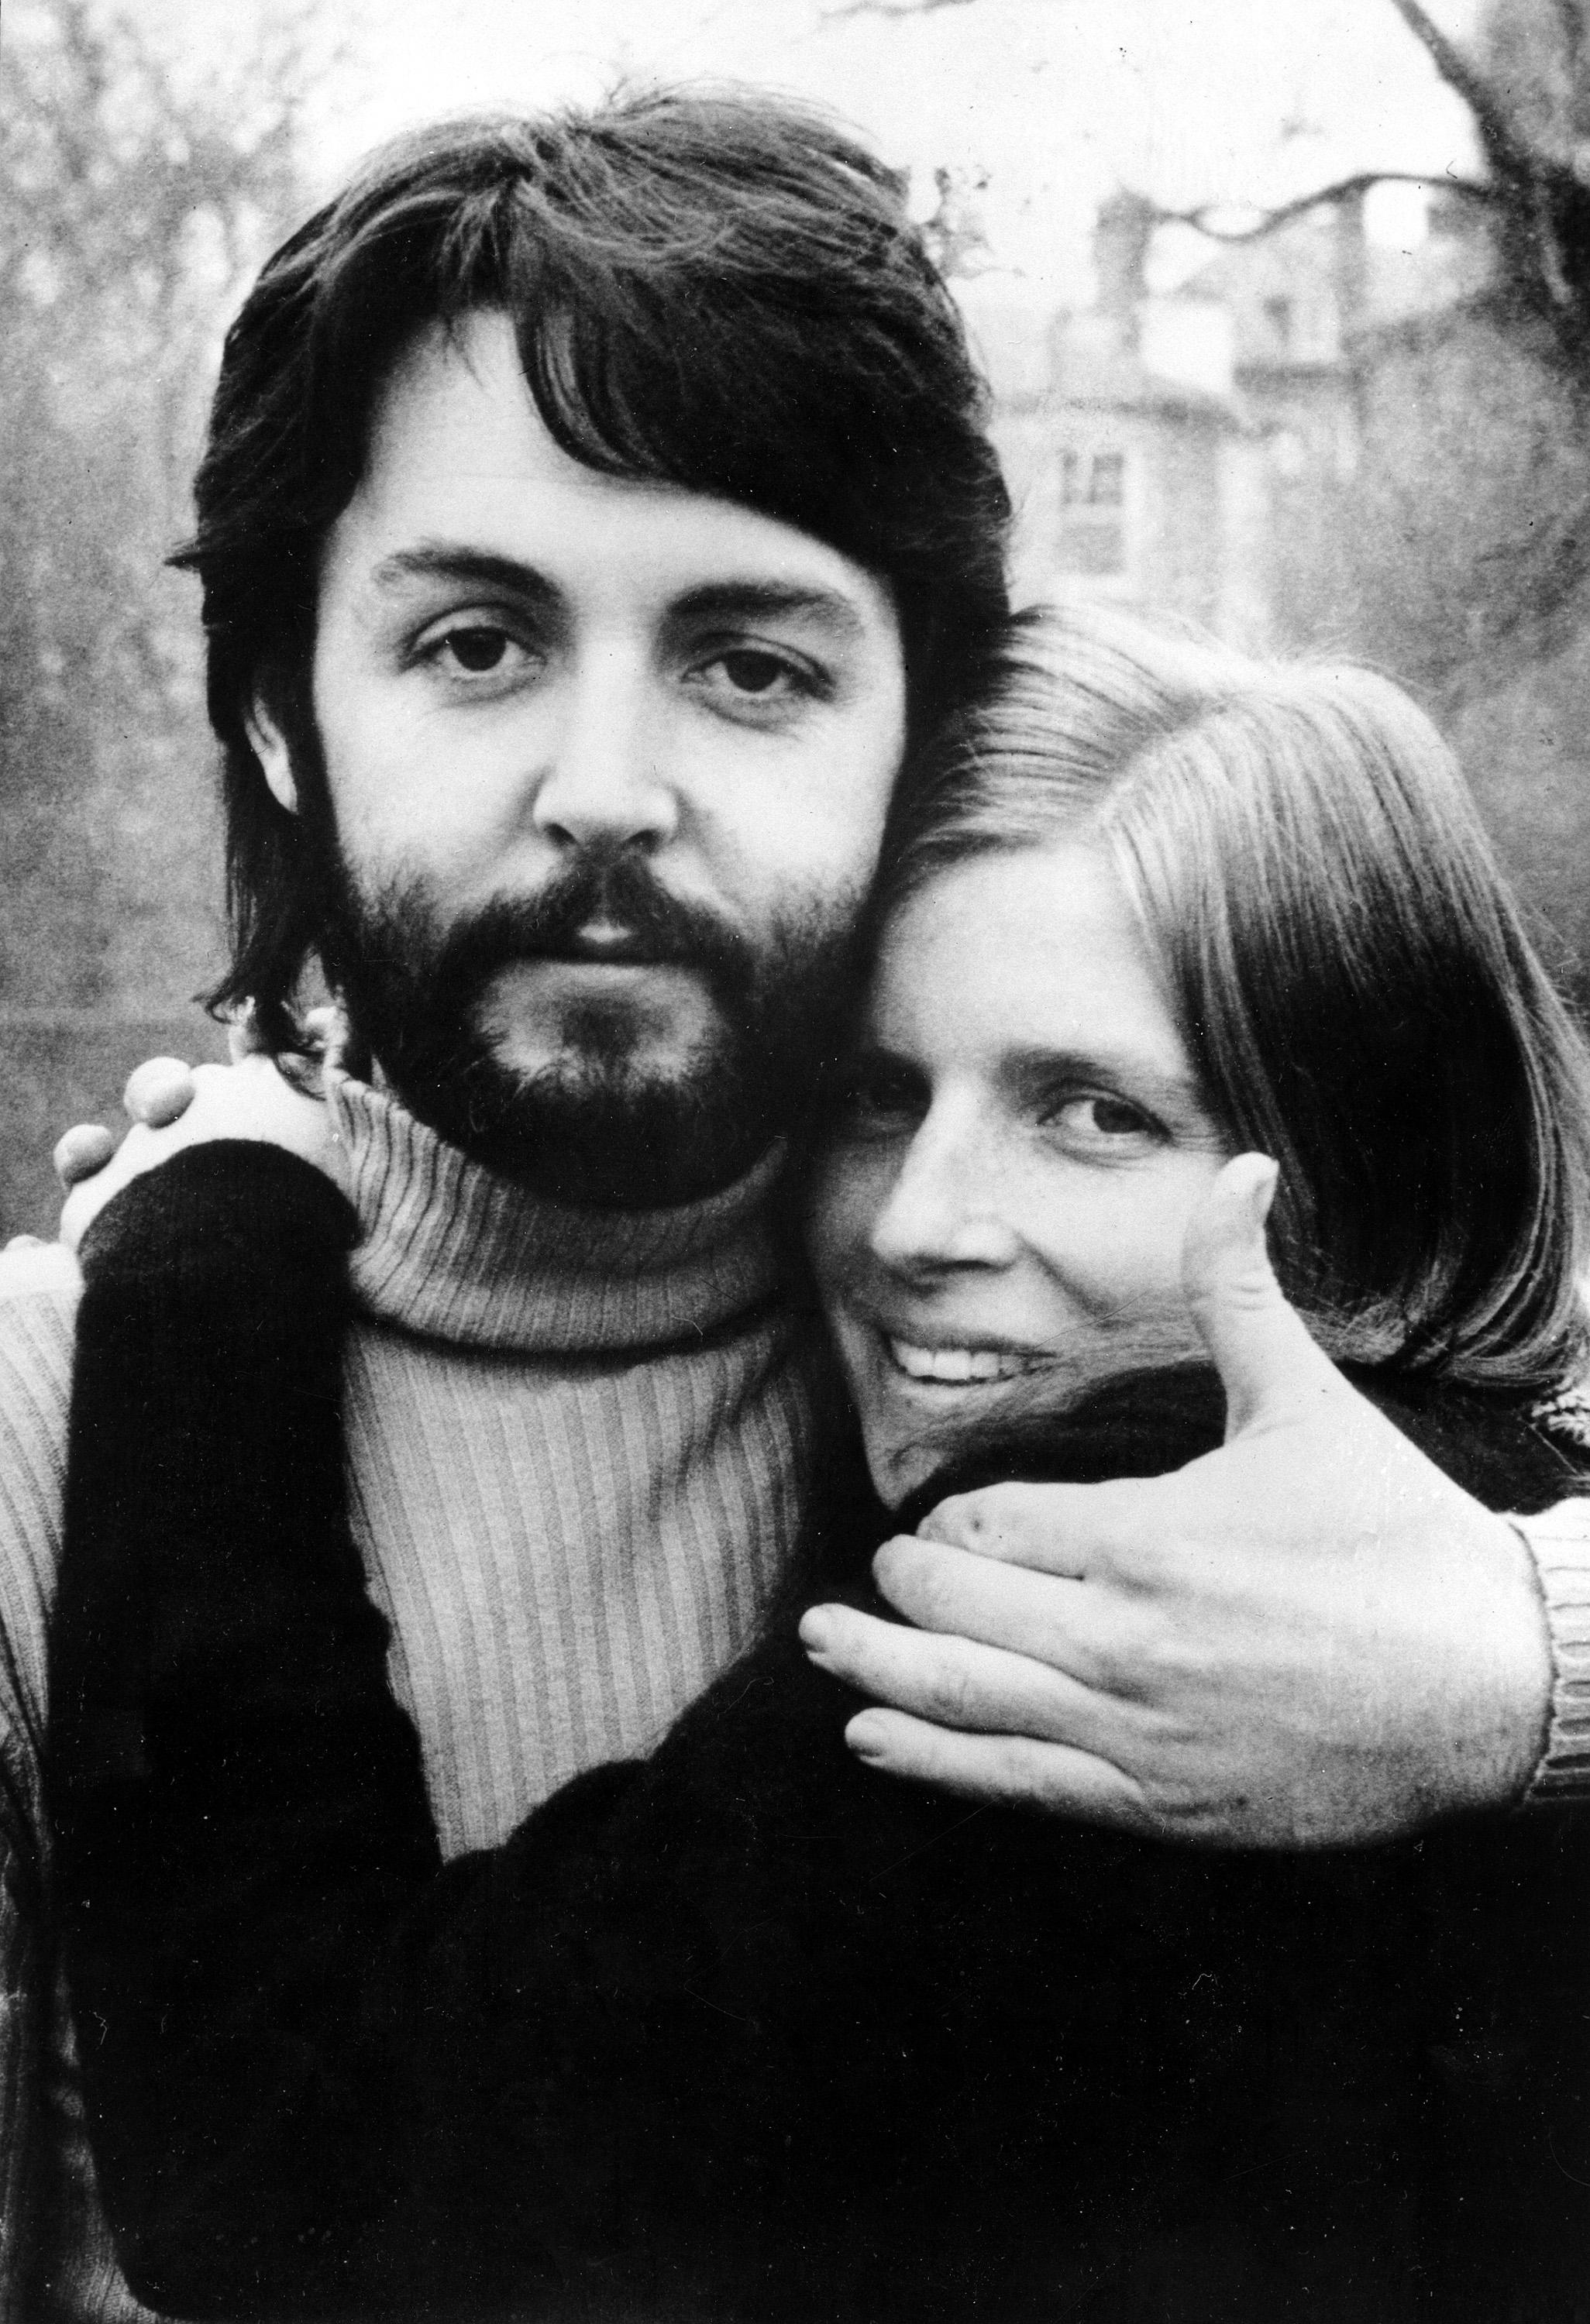 Paul McCartney with wife Linda